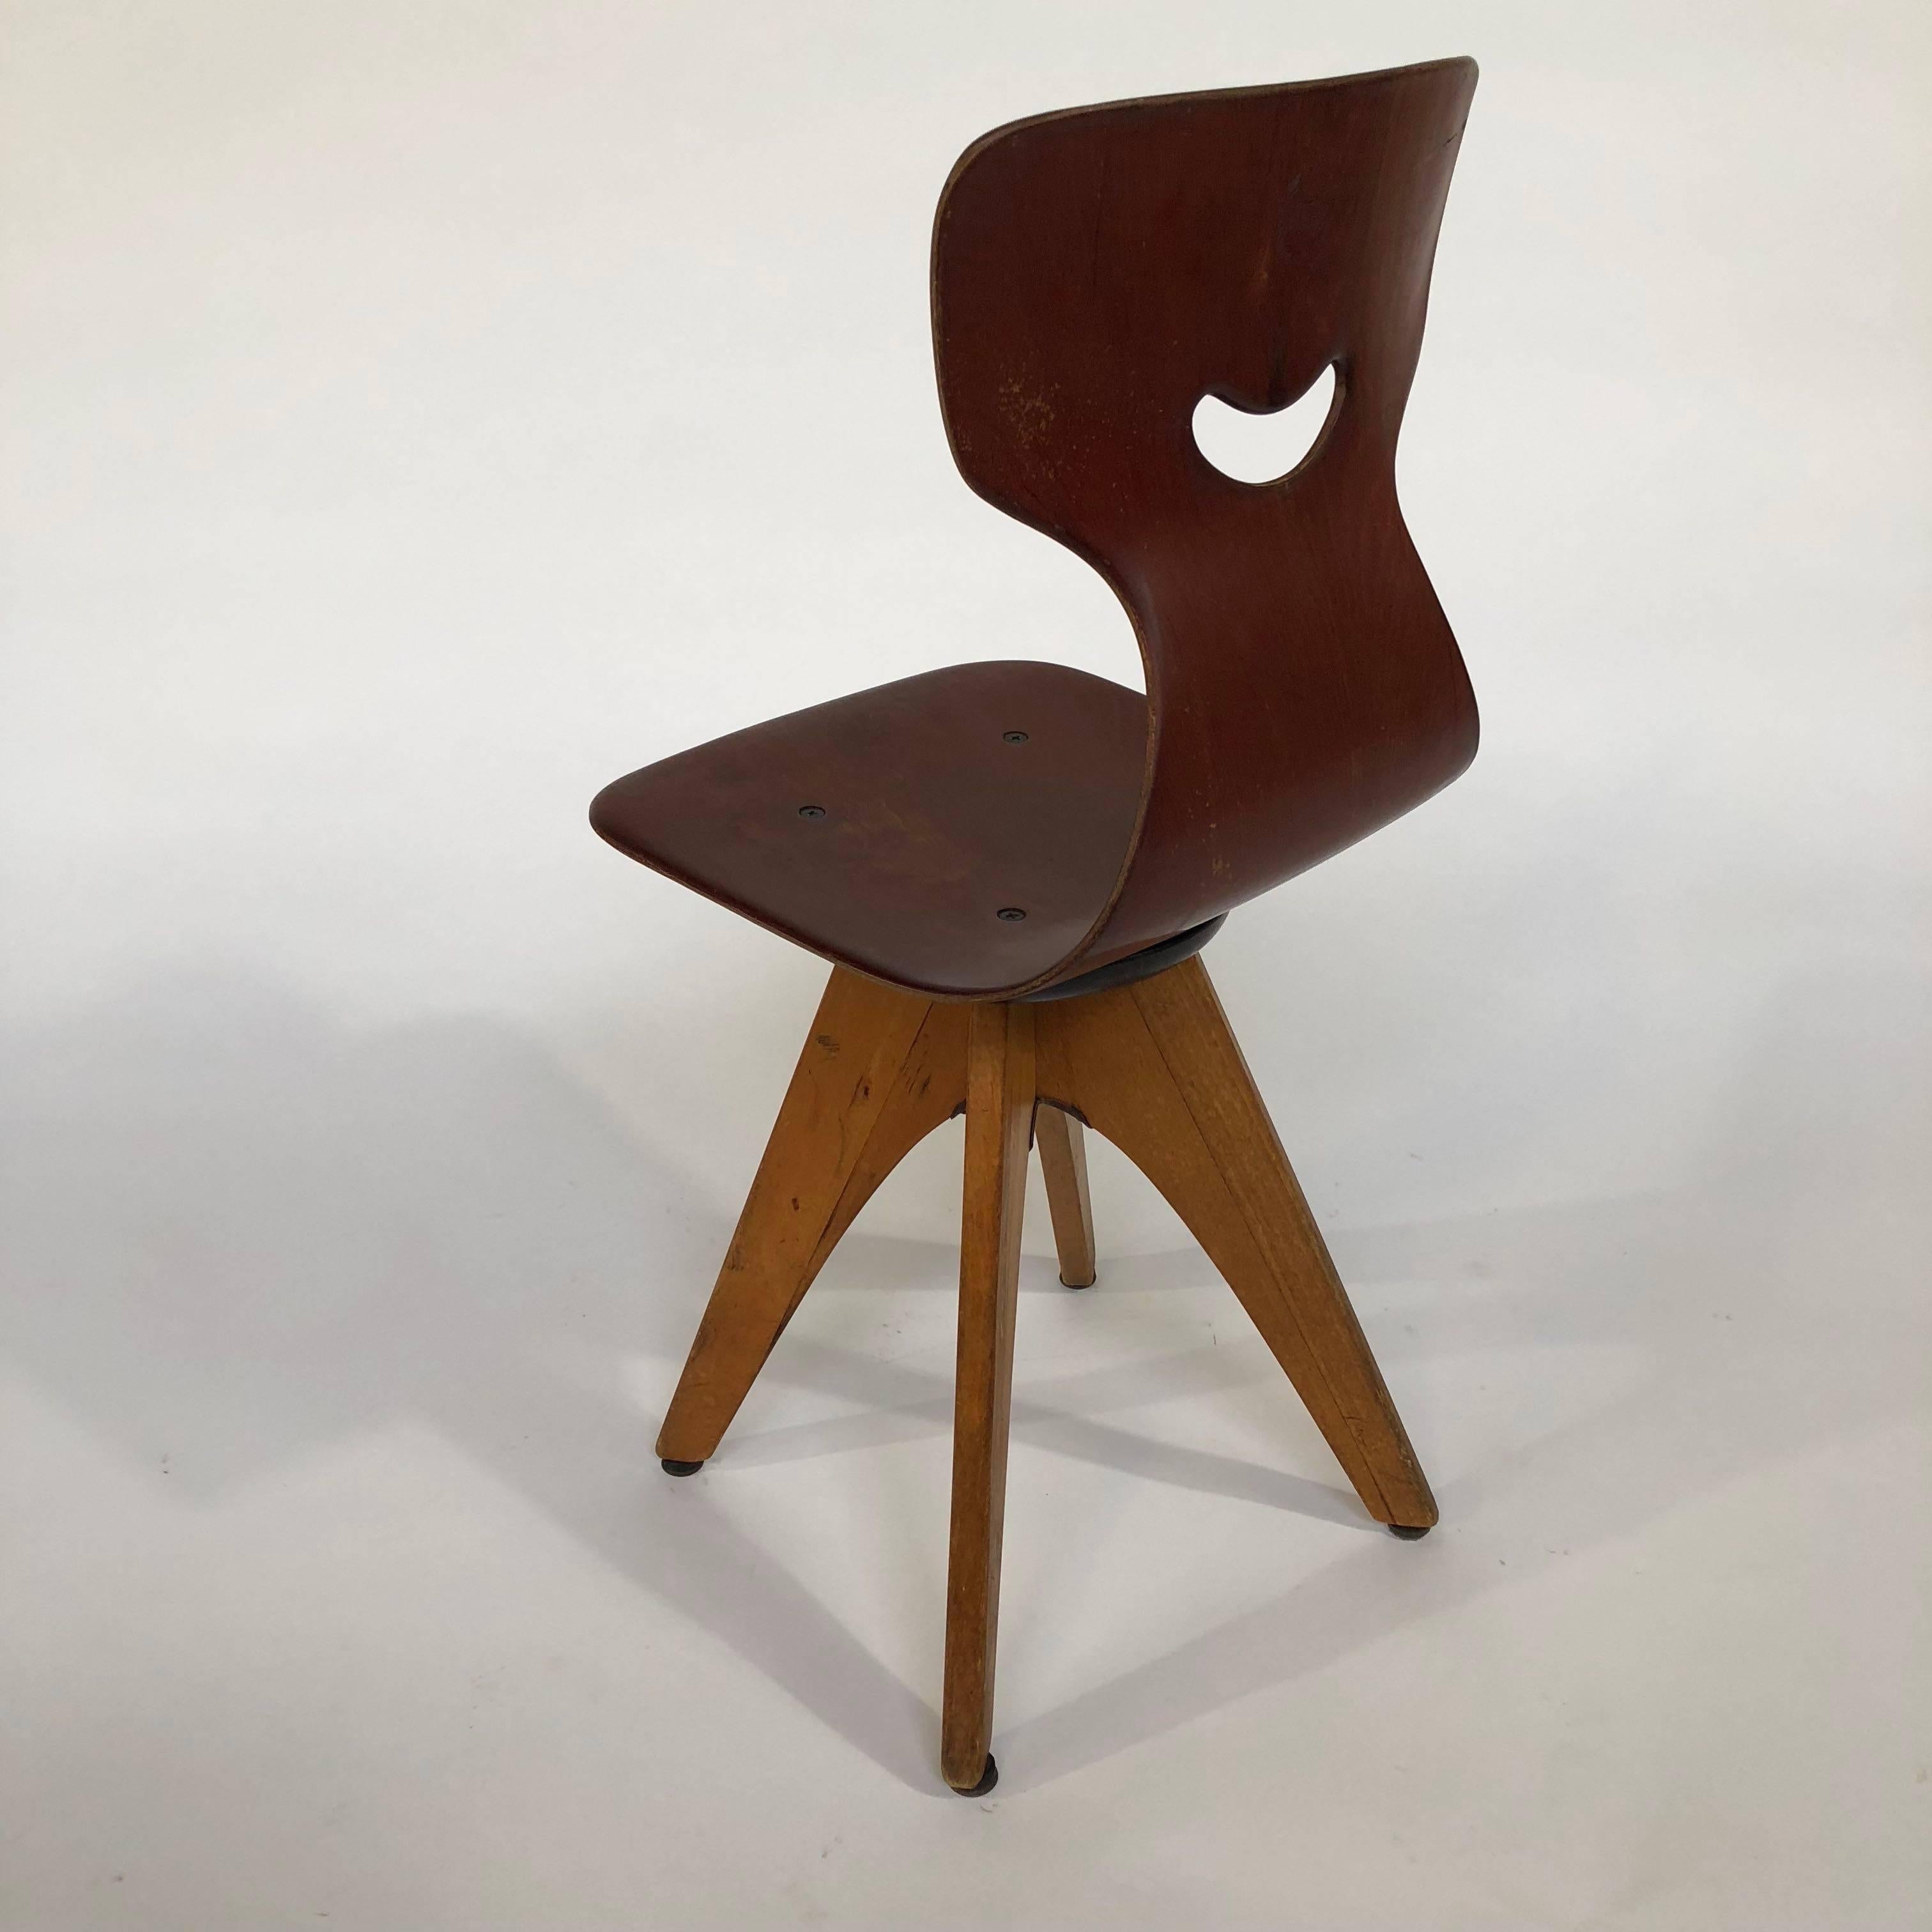 Scandinavian Modern Adam Stegner Children's Swivel Chairs by Flötotto 1950s For Sale